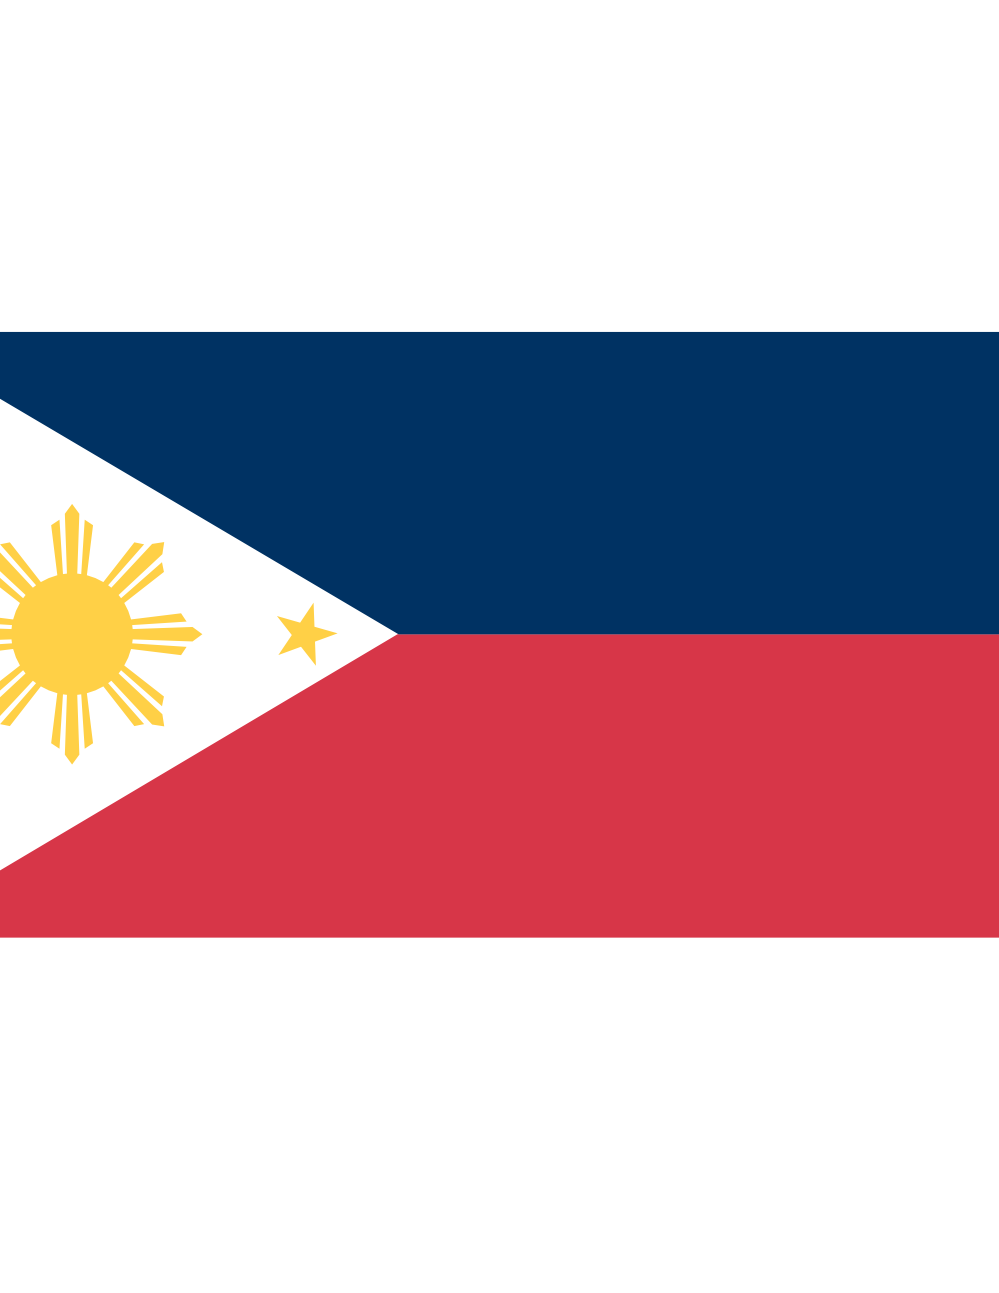 Philippine Flag Logo